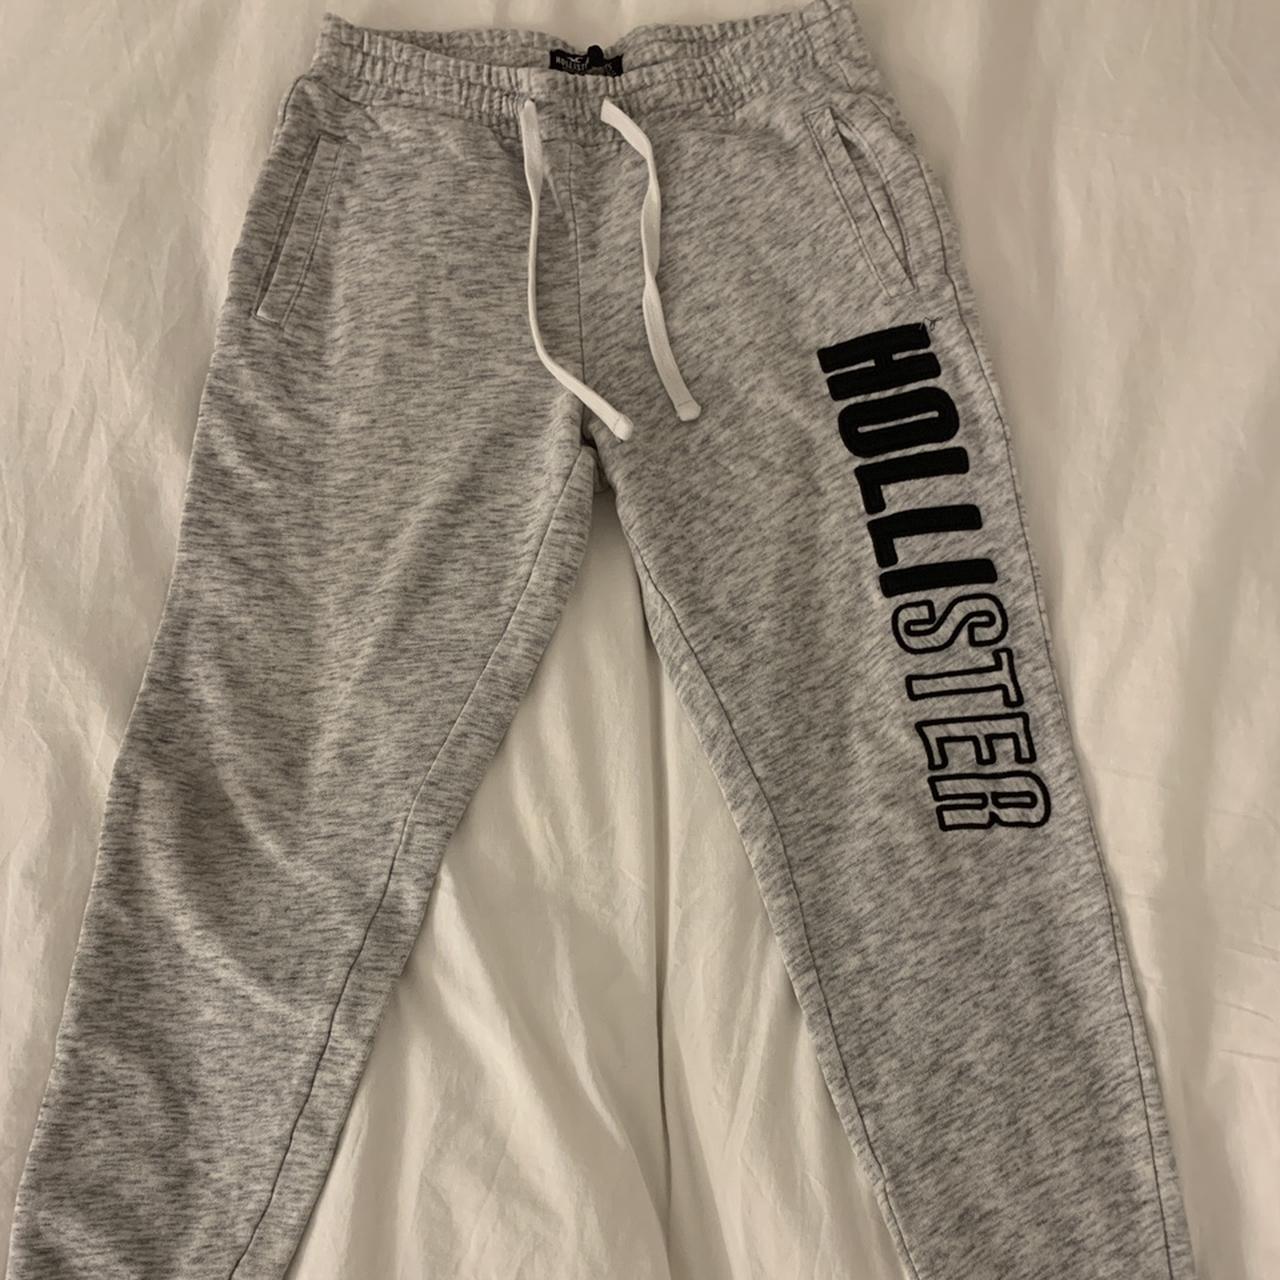 Hollister sweatpants in black with side script logo